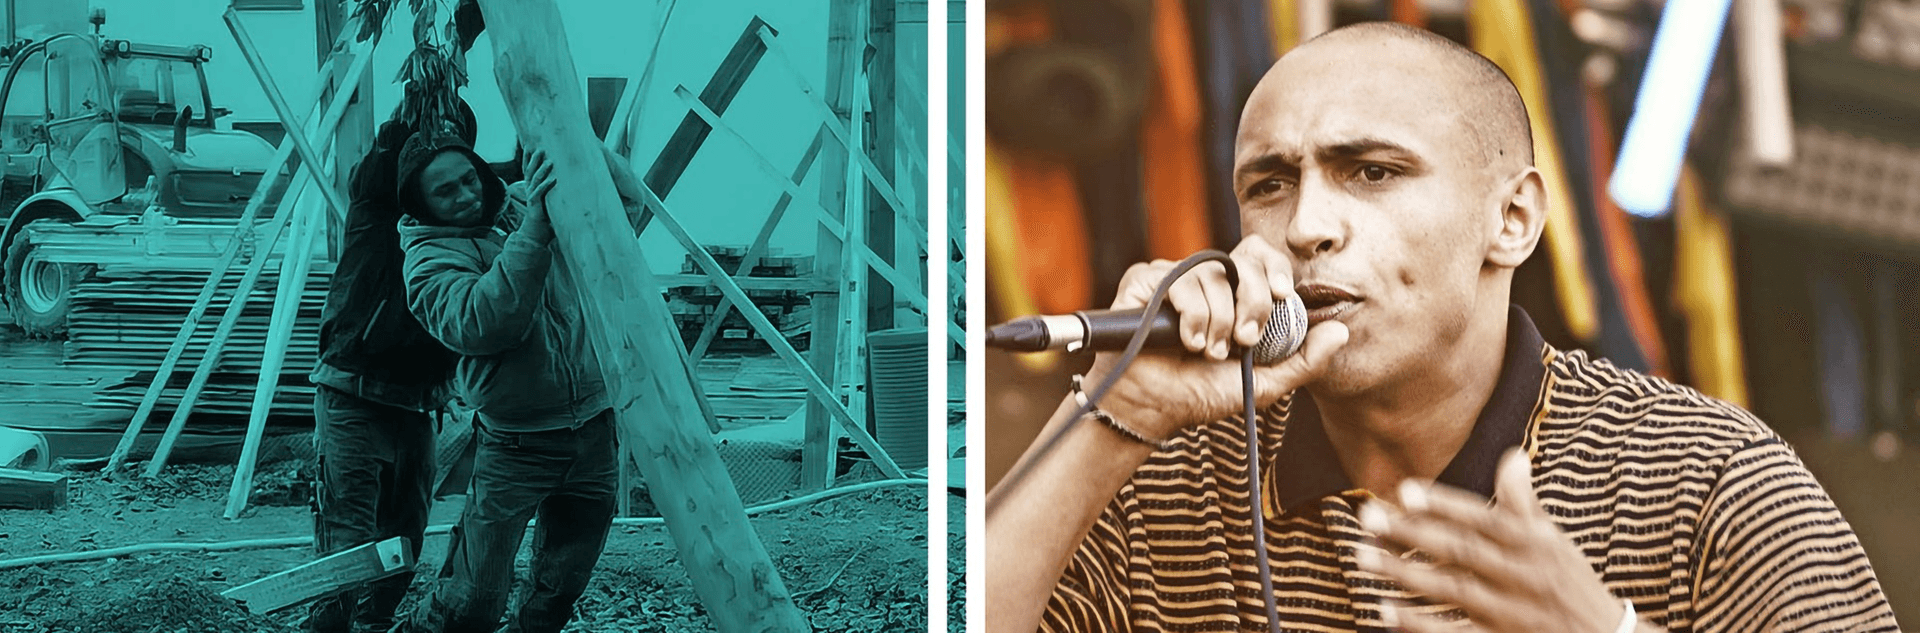 Yung Obama: Baustelle Hiphop